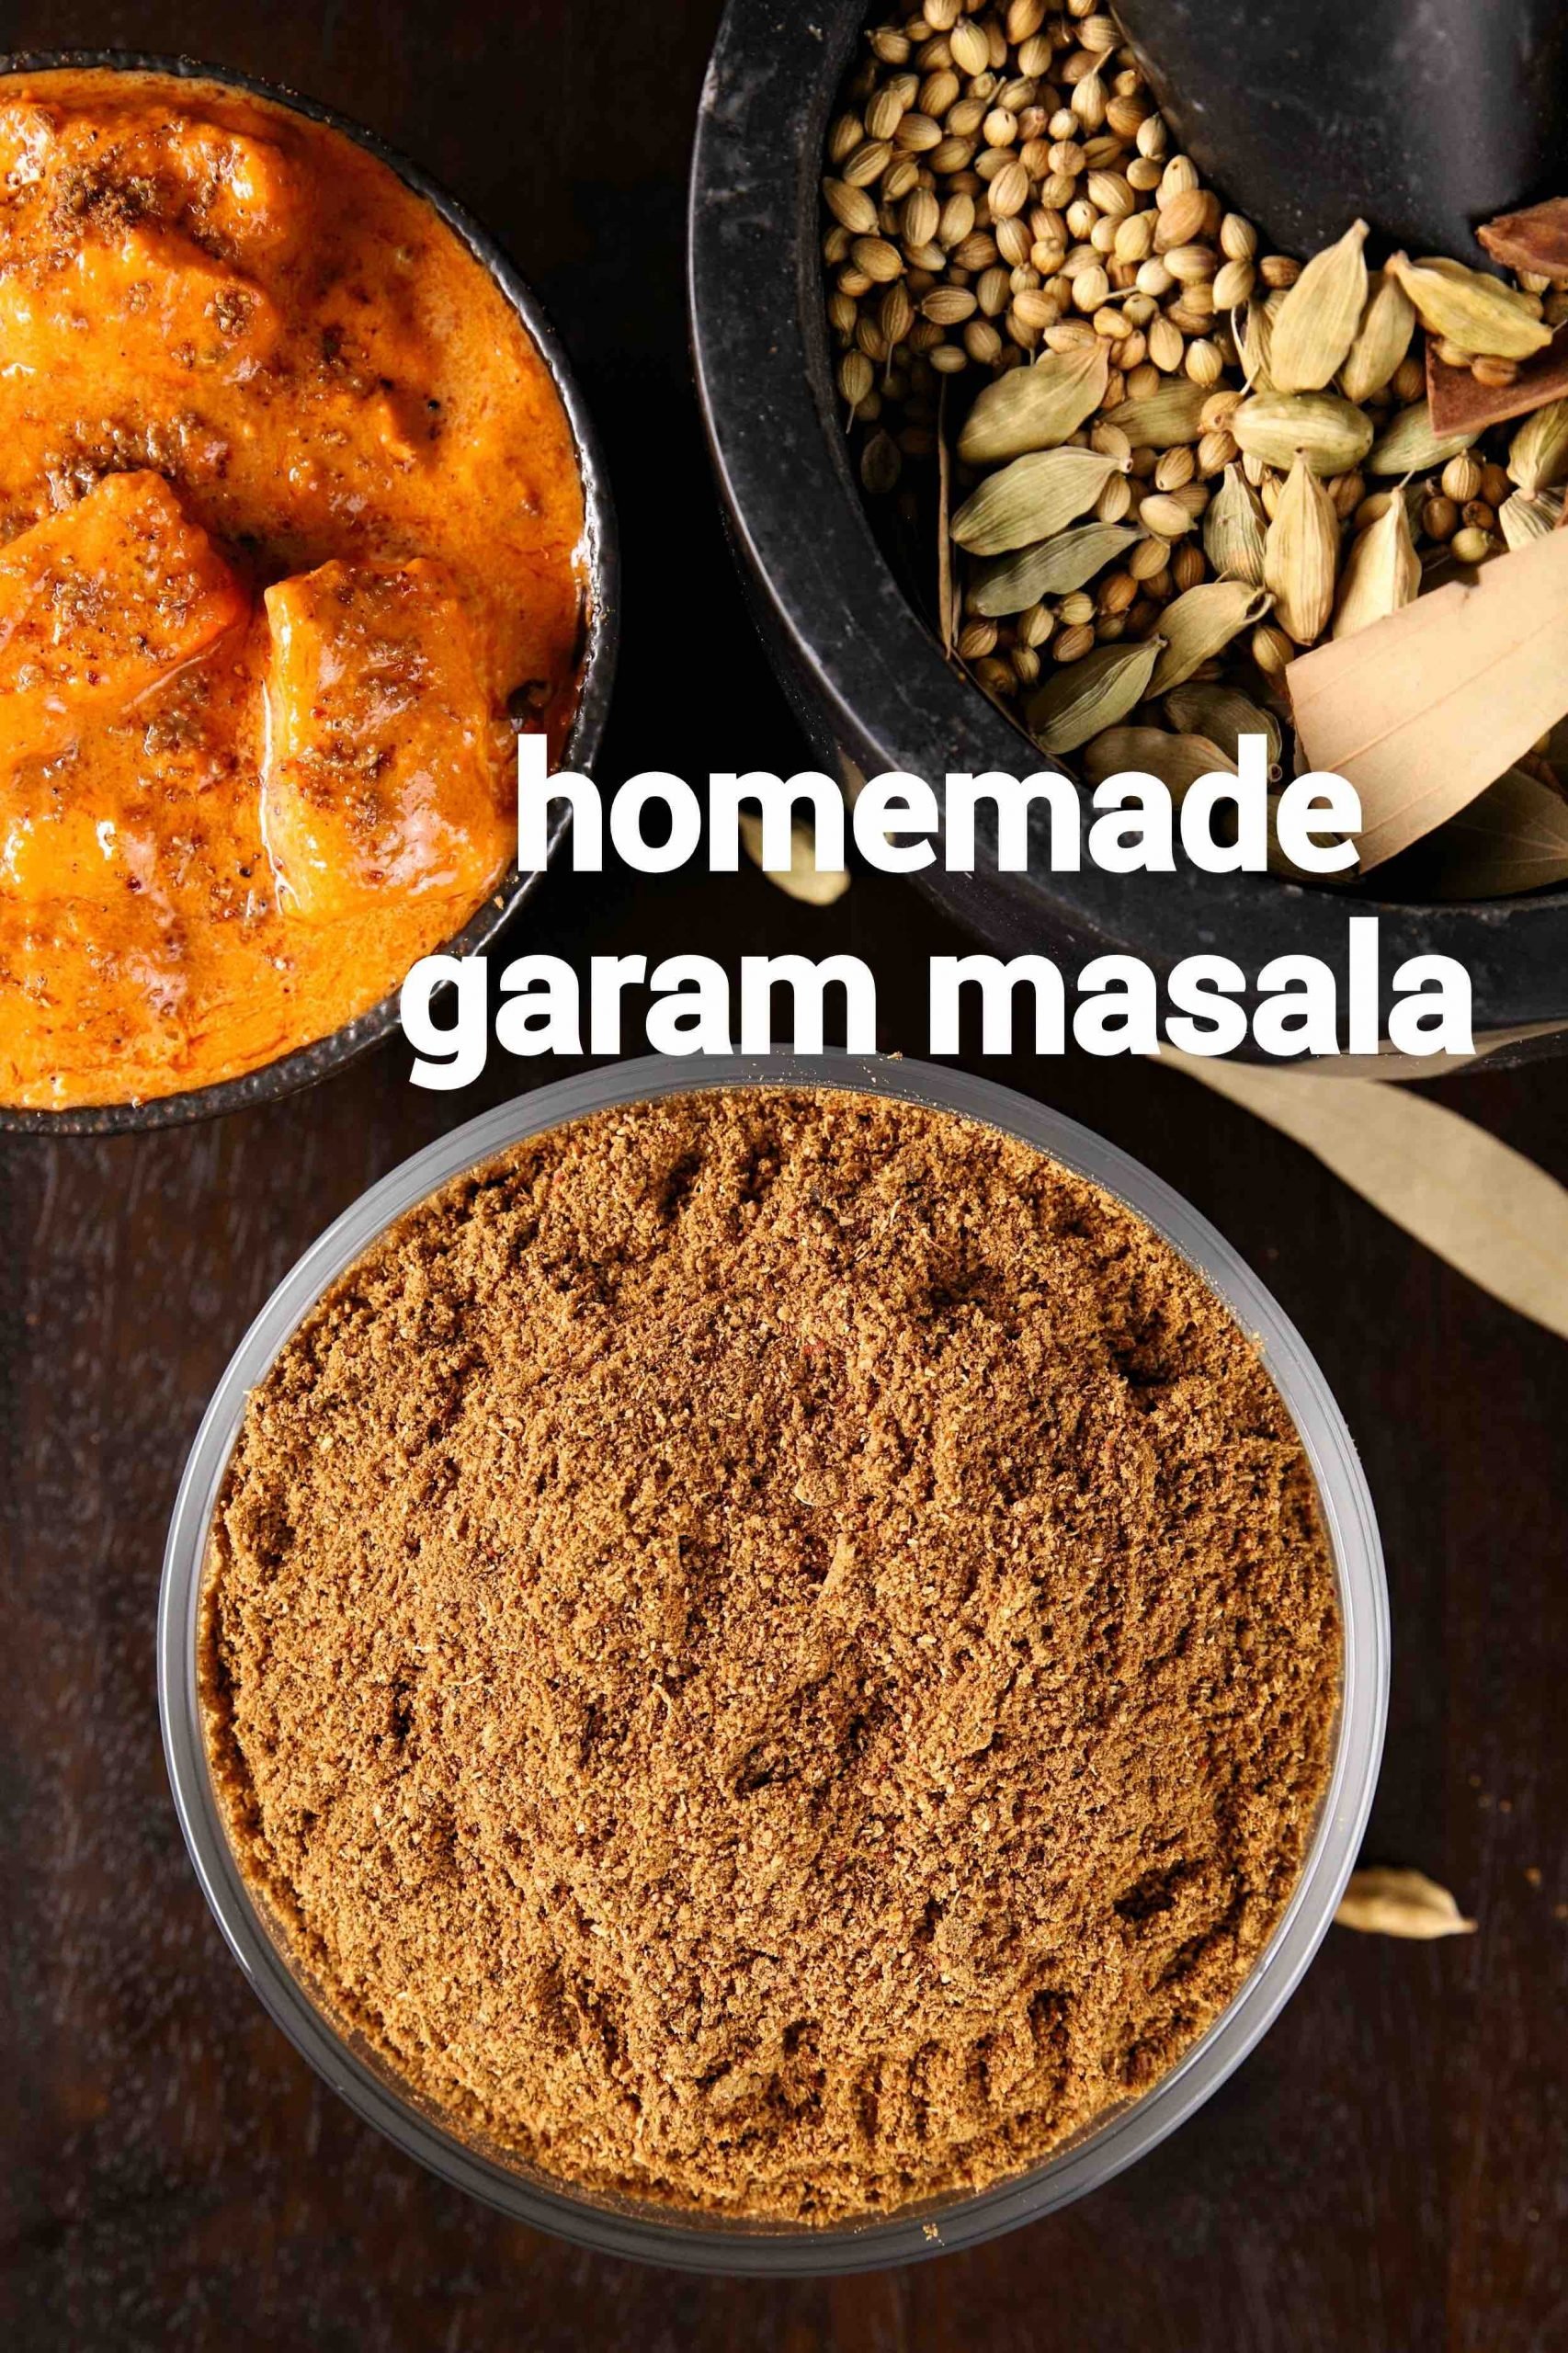 Homemade Garam Masala Recipe